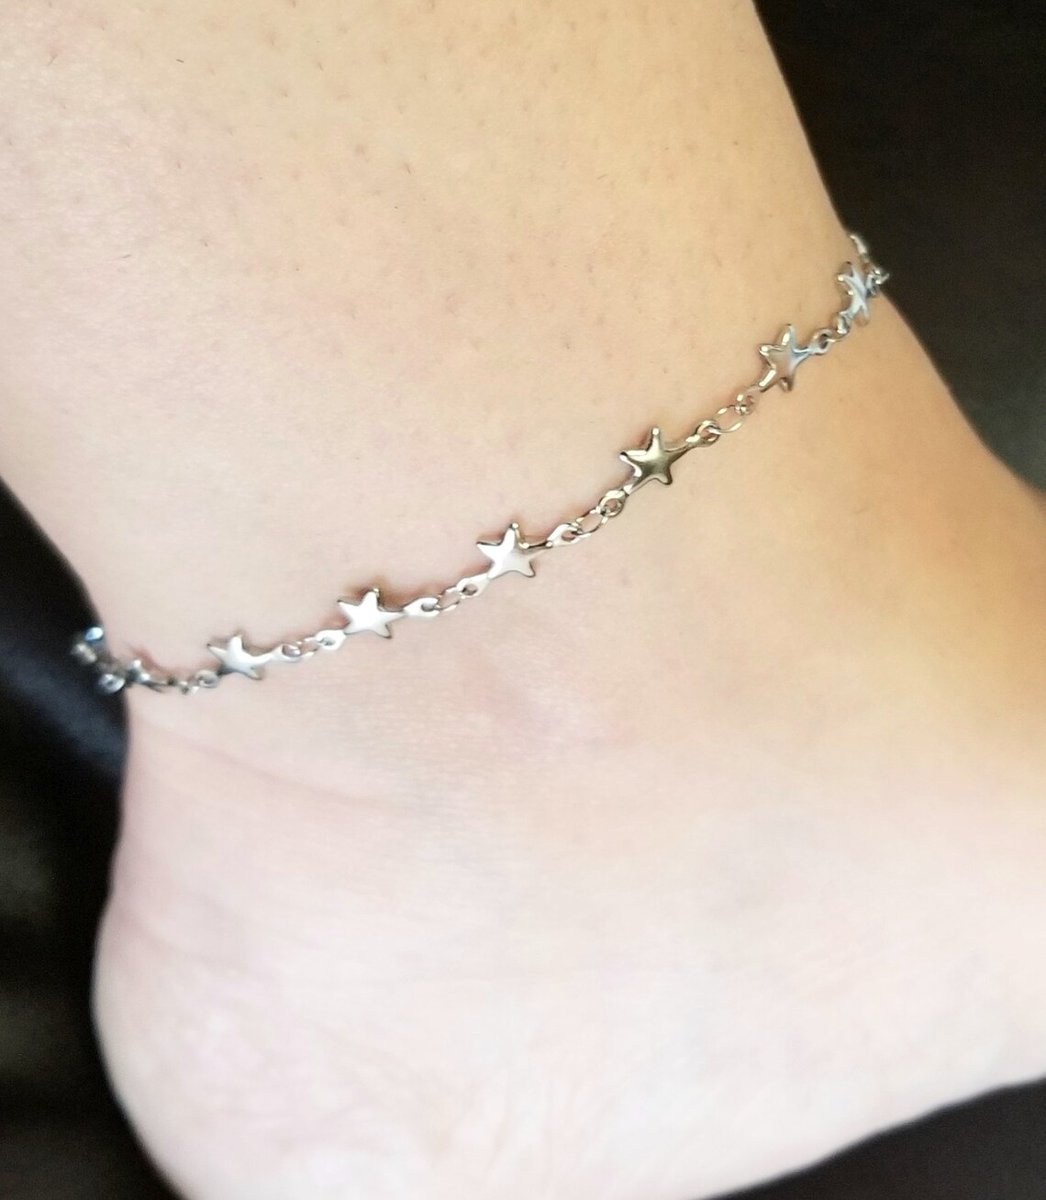 Star Ankle Bracelet, Star Anklet, Silver Anklets, Star Jewelry  #giftsforher #handmade #handmadejewelry #Mothersday #mothersdaygift #mothersdaygifts #giftsformom #Etsy #star #stars #starjewelry #staranklet #anklet #anklets #anklebracelets 

etsy.me/3U7yQZ9 via @Etsy